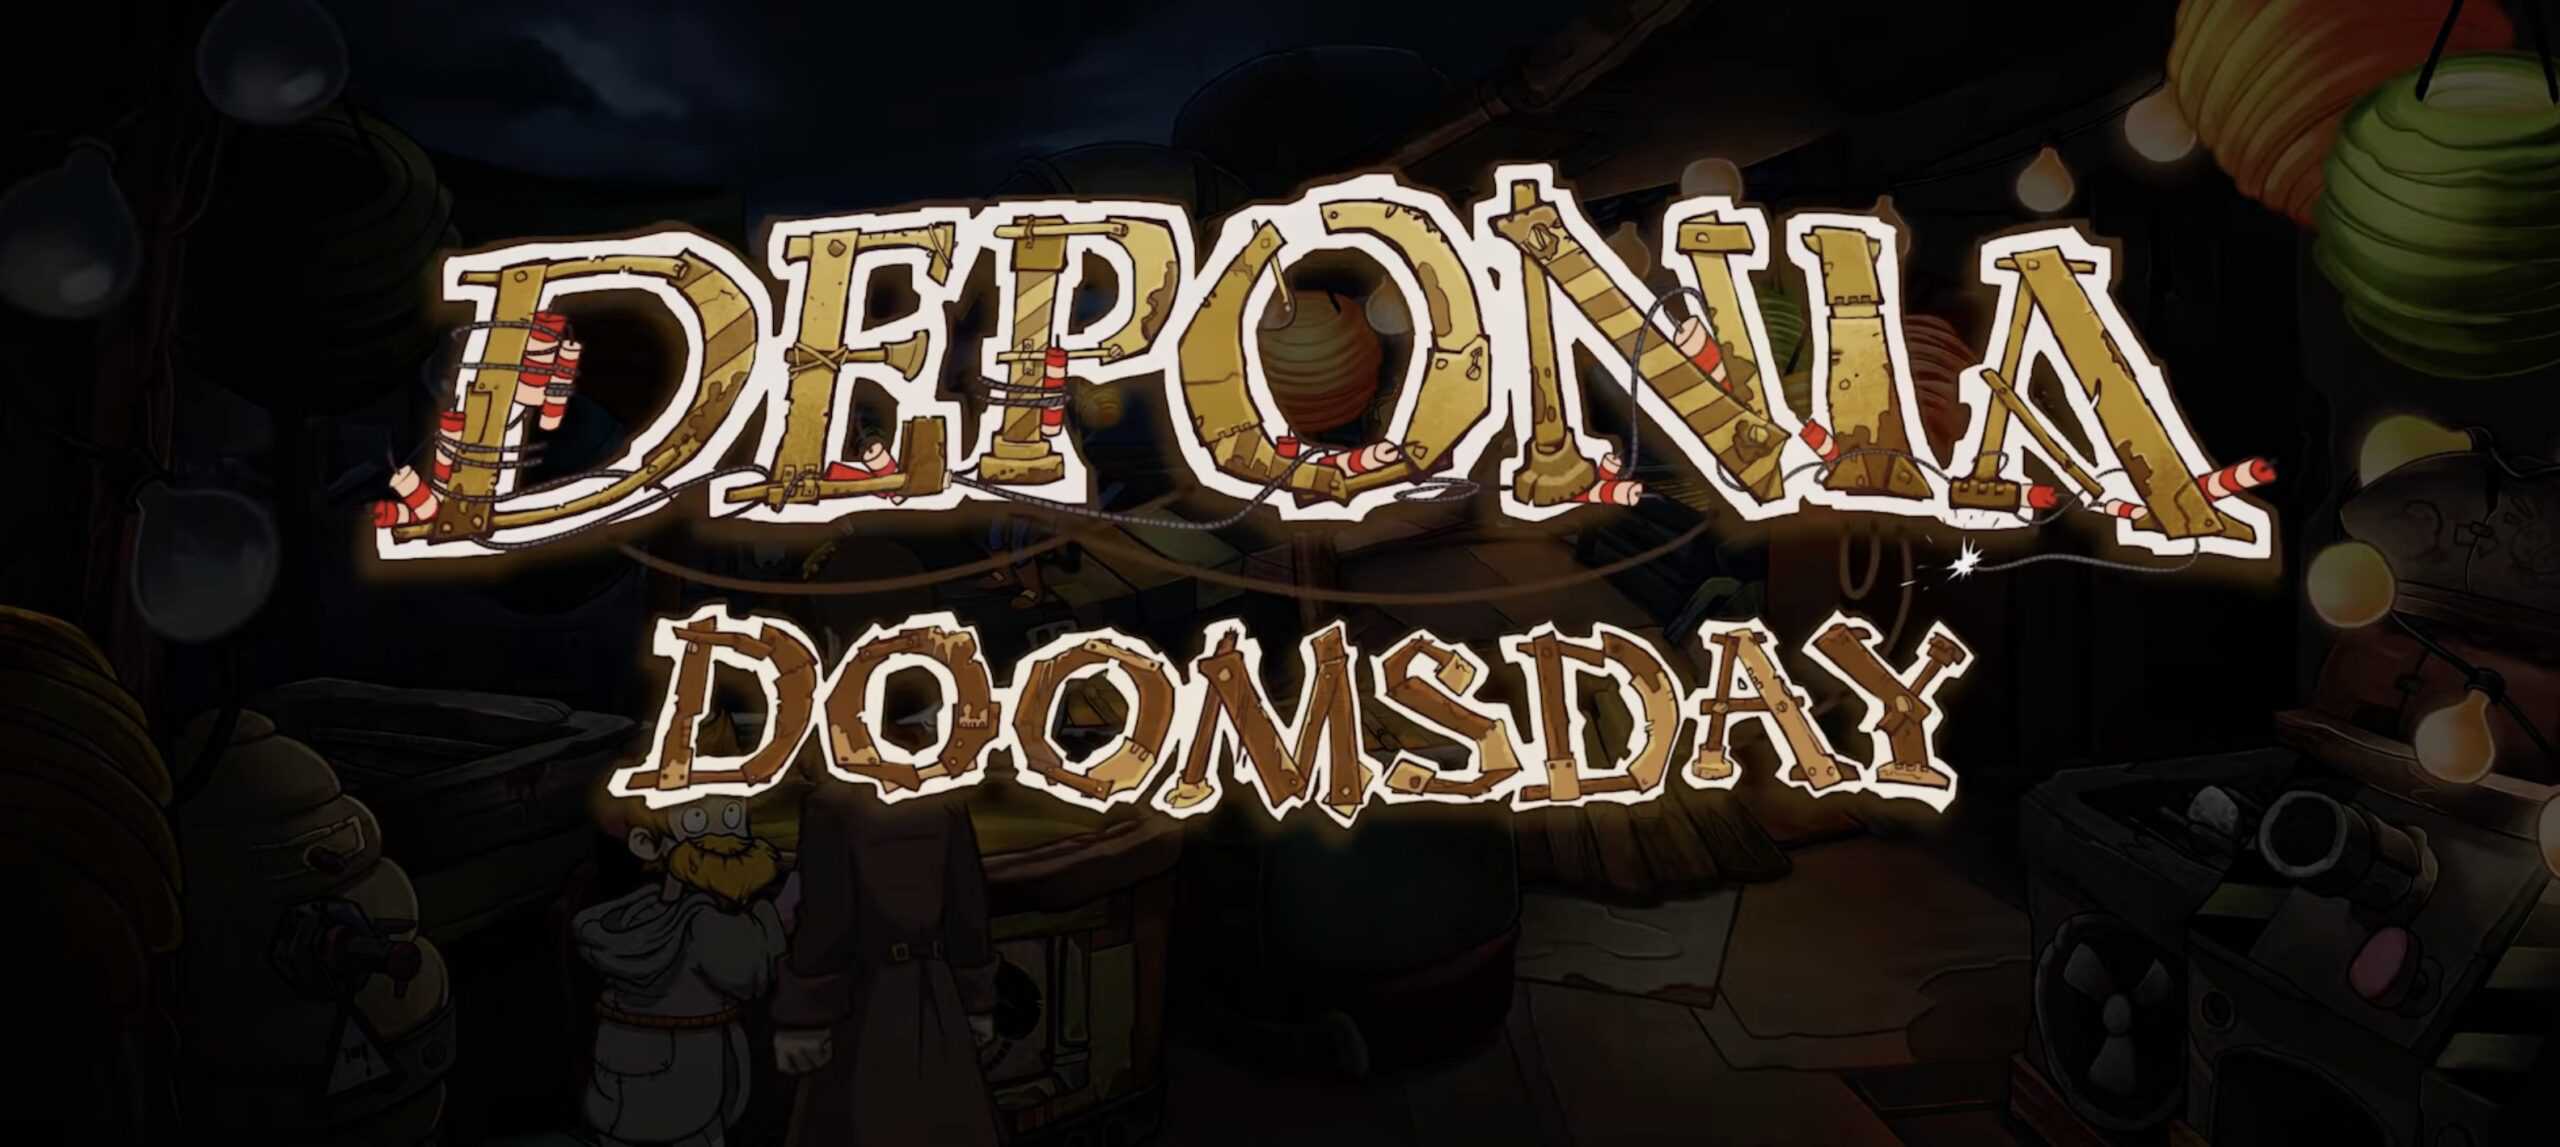 Deponia Doomsday title logo